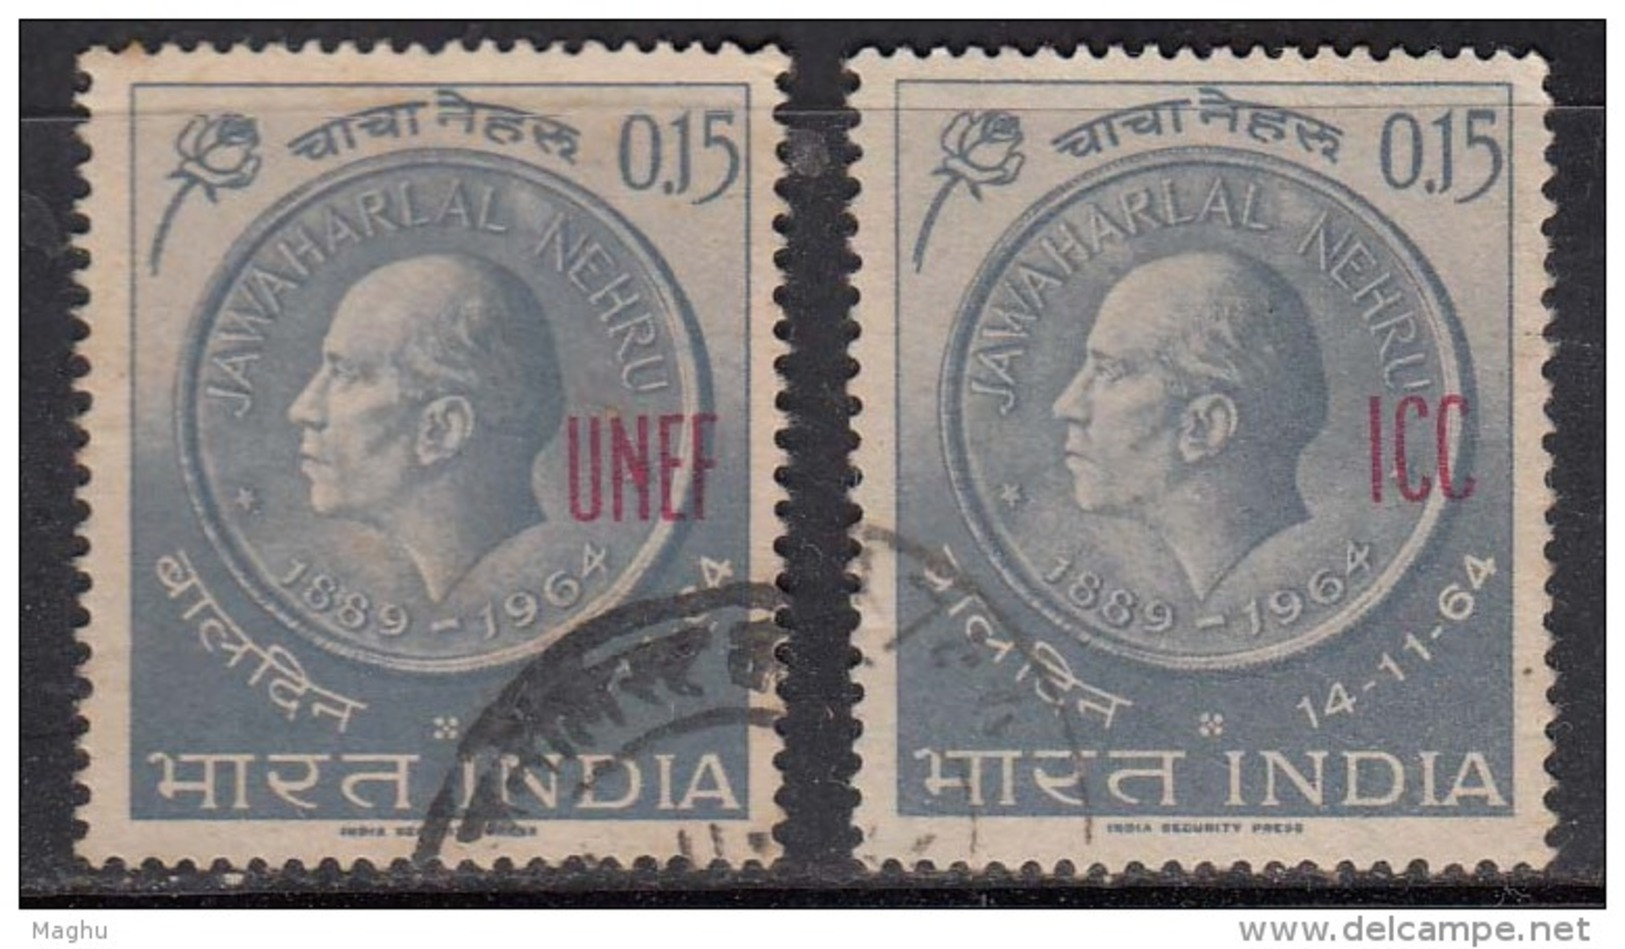 2 Diff., Used UNEF & ICC, On Nehru, U.N. Force United Nations @ Cairo, Gaza, Abu Seeir, Palestine, Rose, Coin India - Militärpostmarken